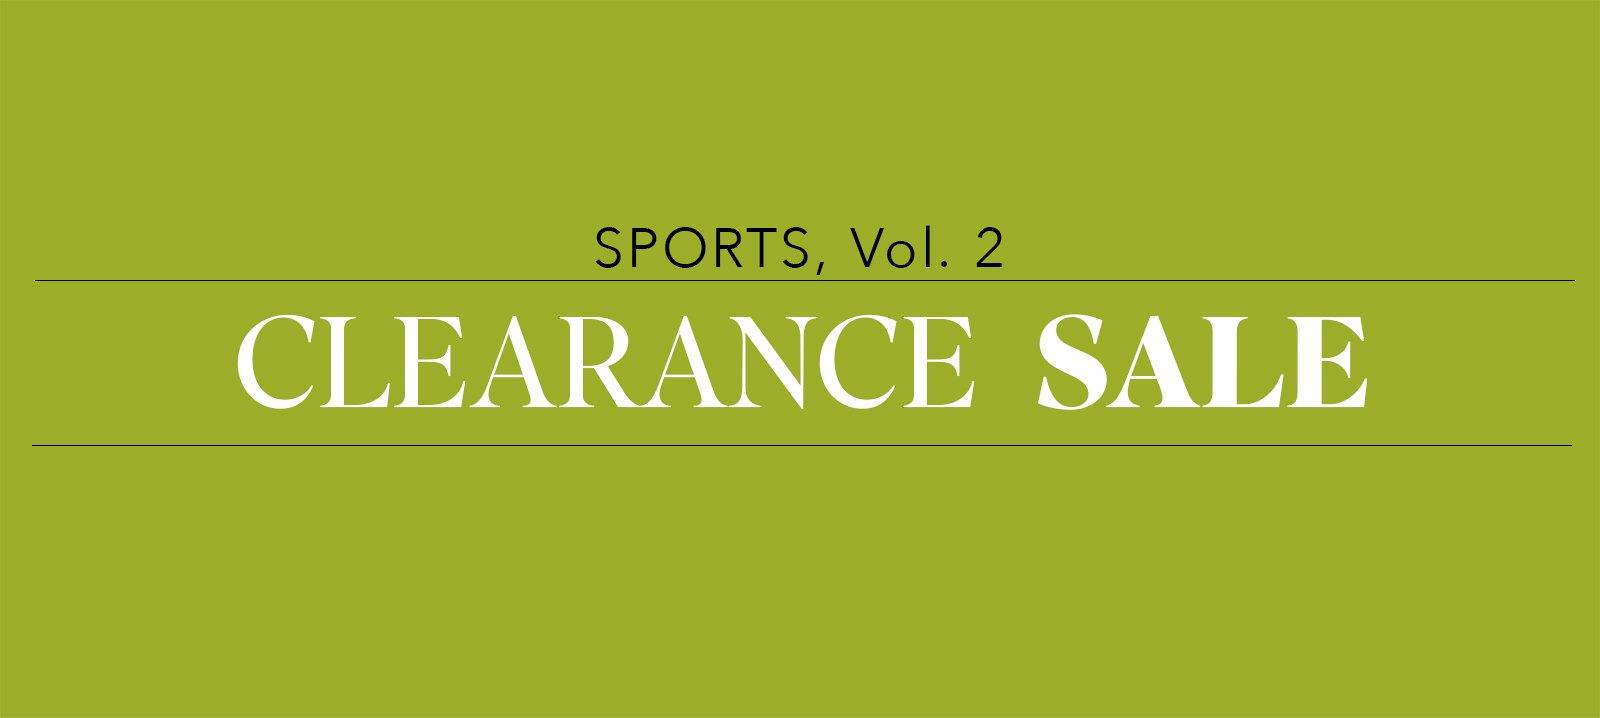 Clearance sale : Sports vol.2